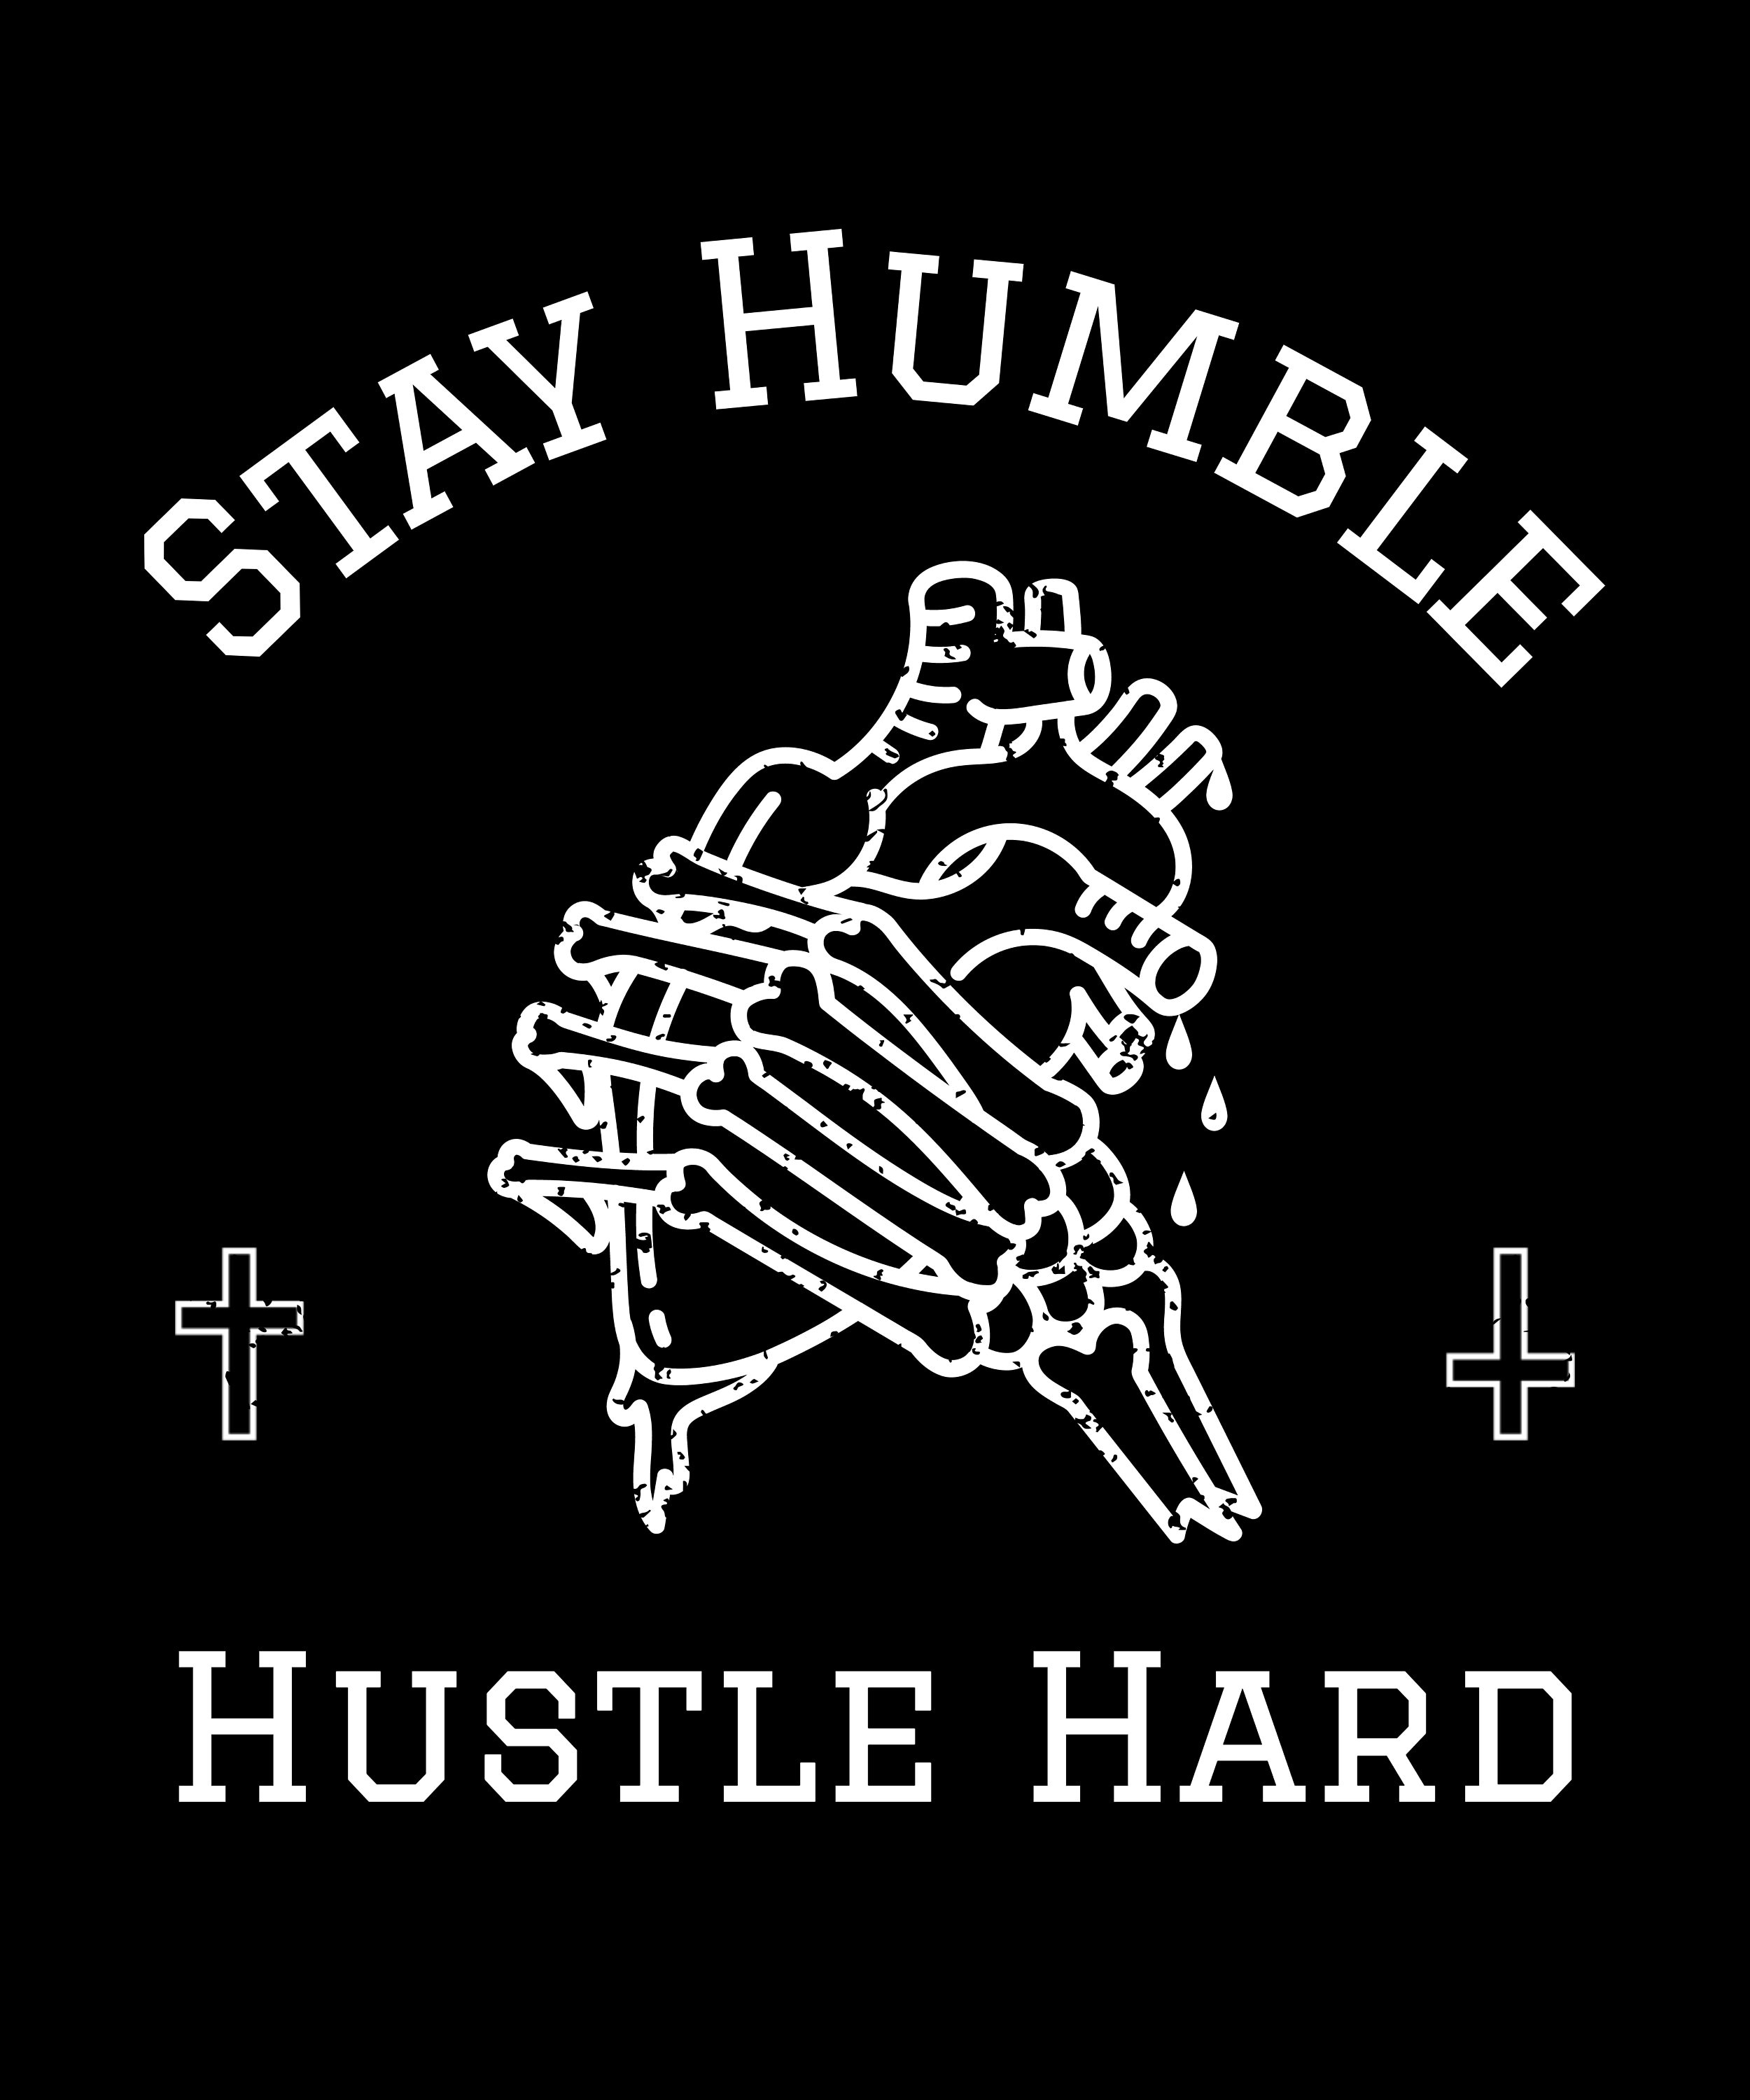 Stay humble hustle hard  YouTube